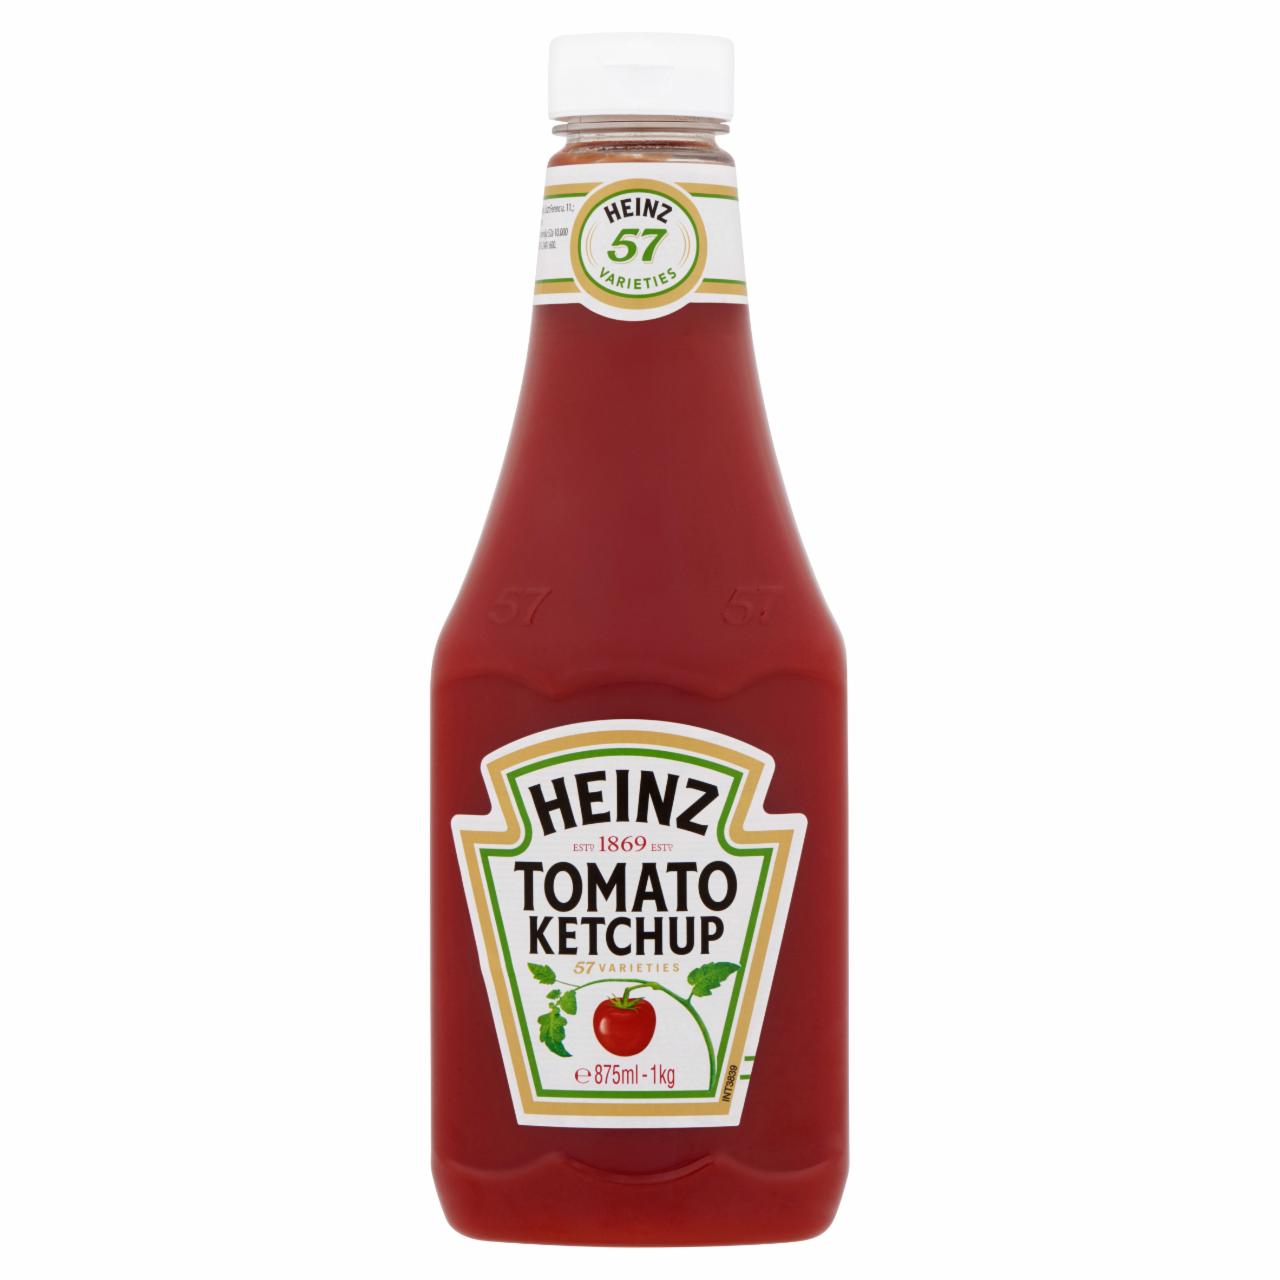 Képek - Heinz Tomato ketchup 1 kg